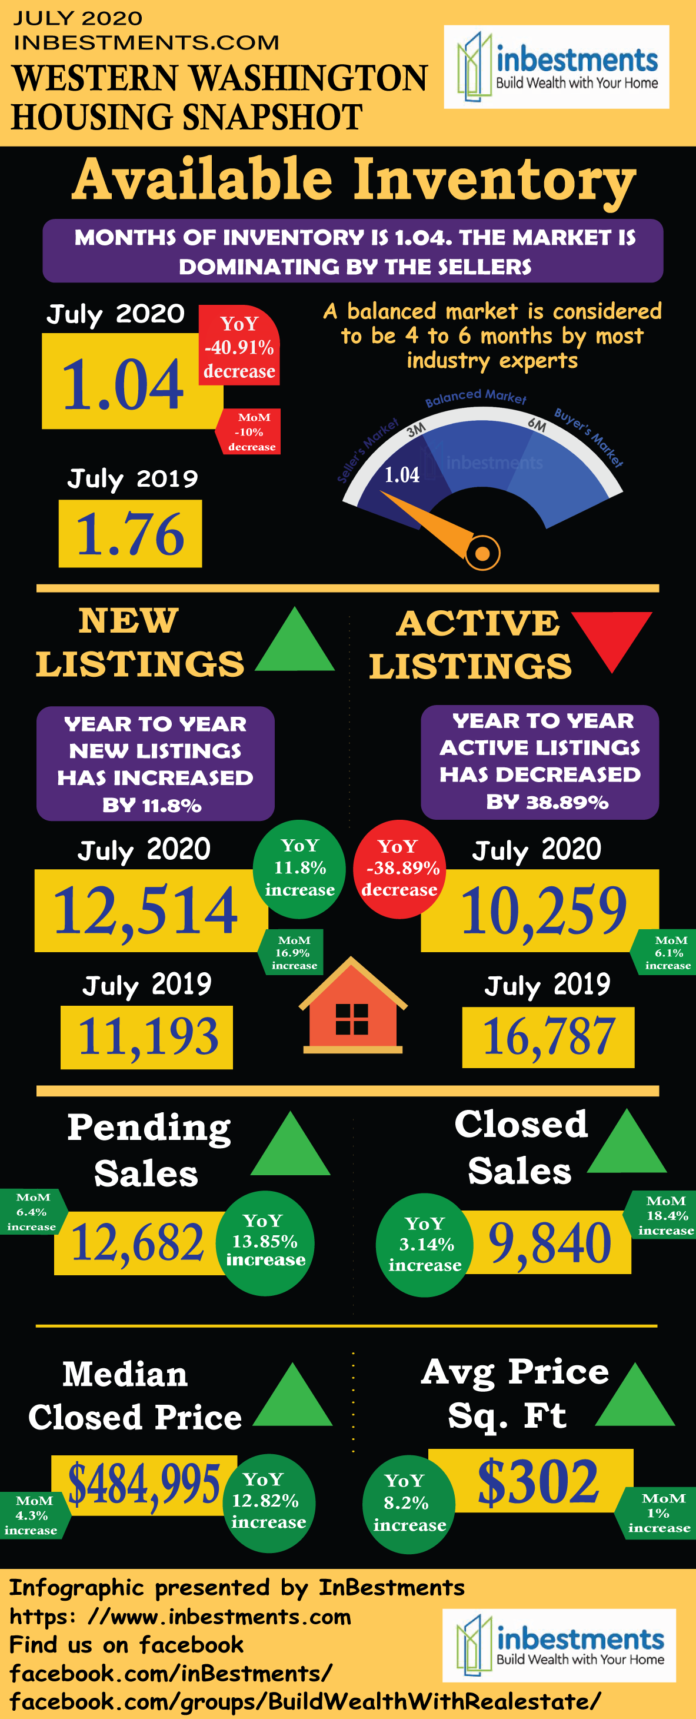 🏠 Western Washington Housing Market Update by